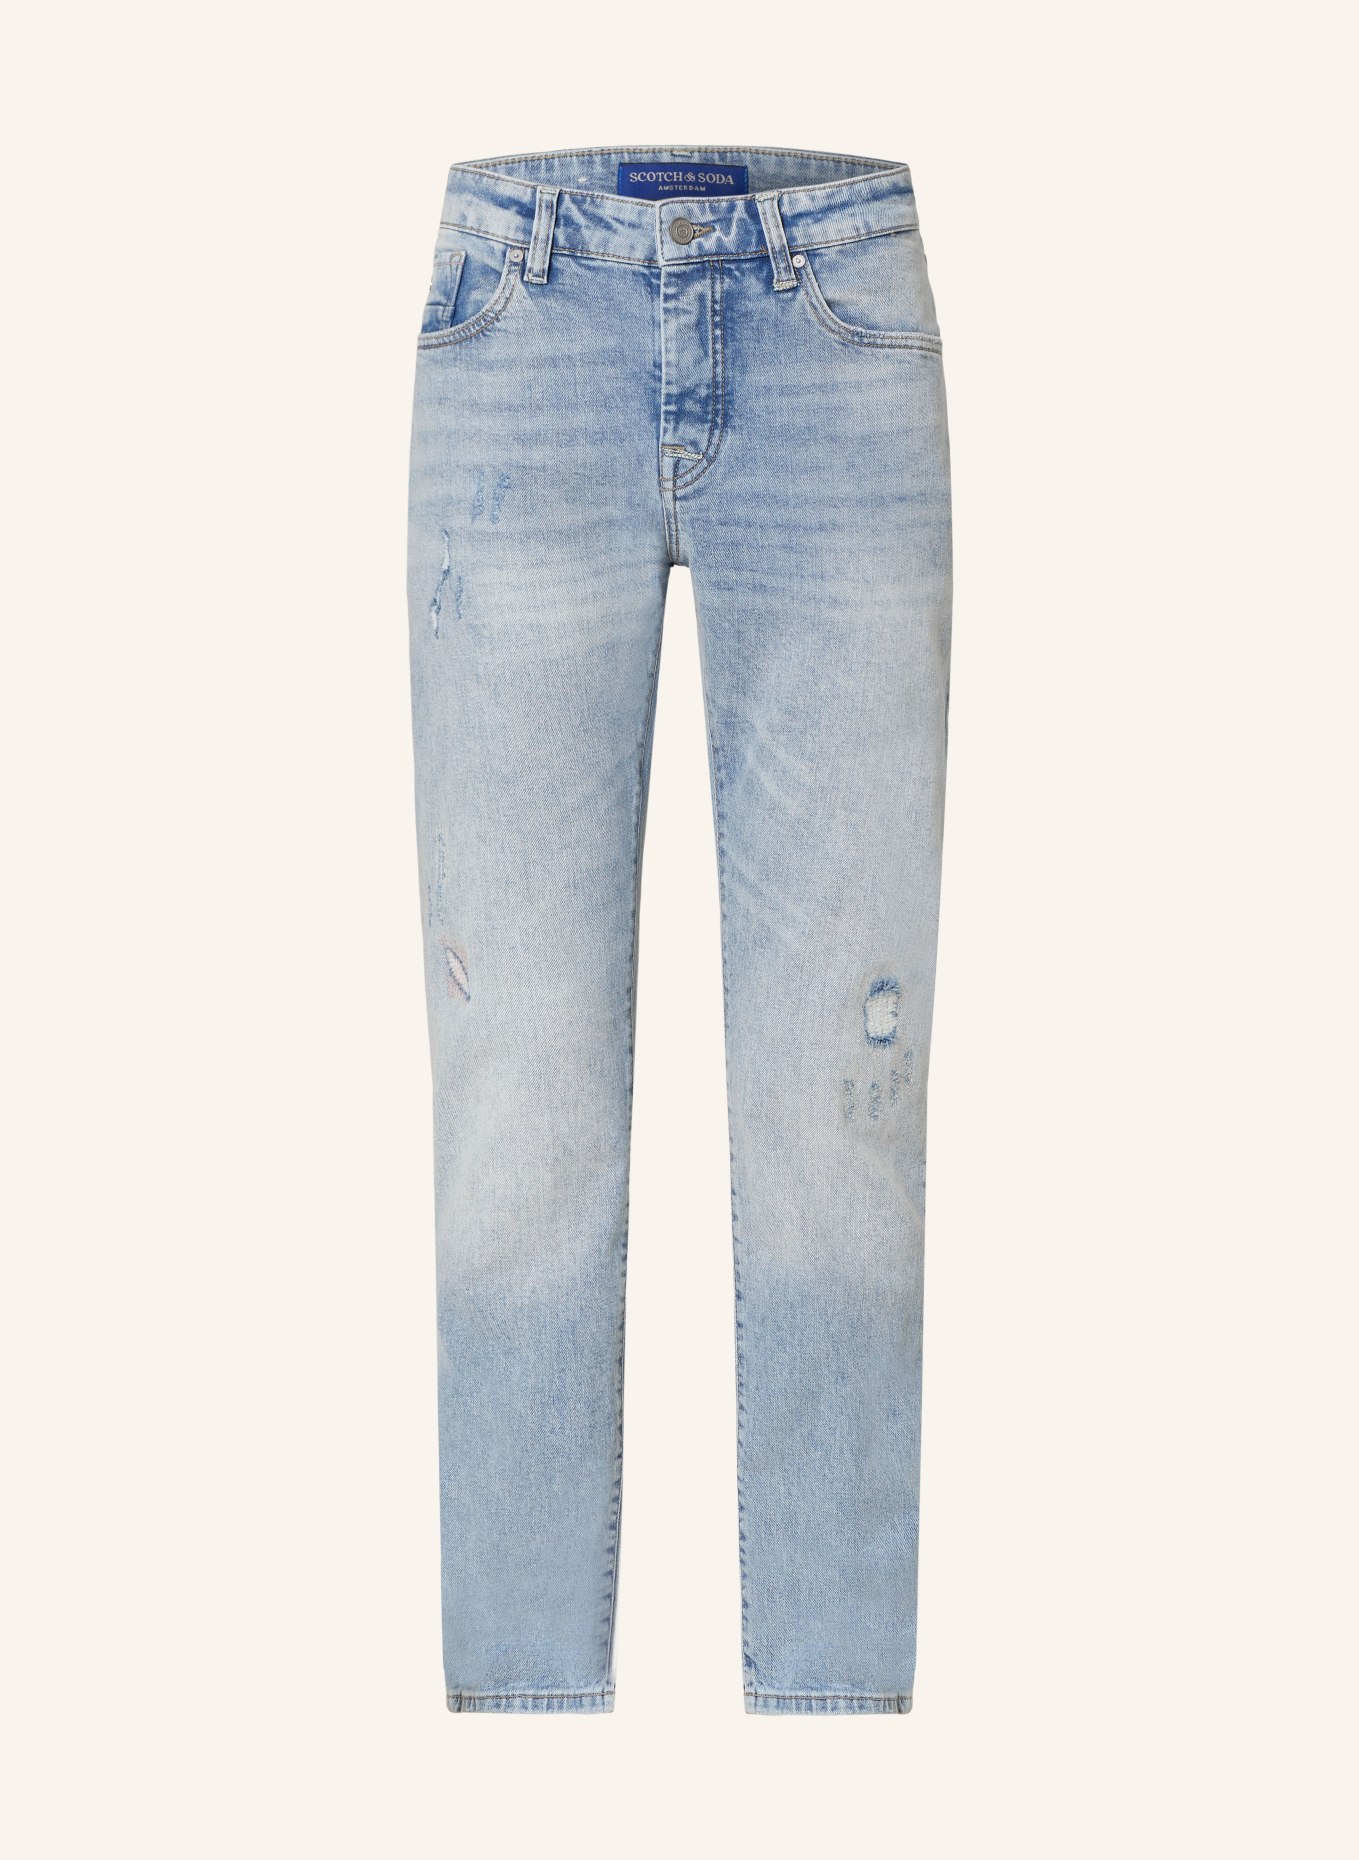 SCOTCH & SODA Jeans RALSTON Regular Slim Fit, Farbe: 7087 New Daze (Bild 1)